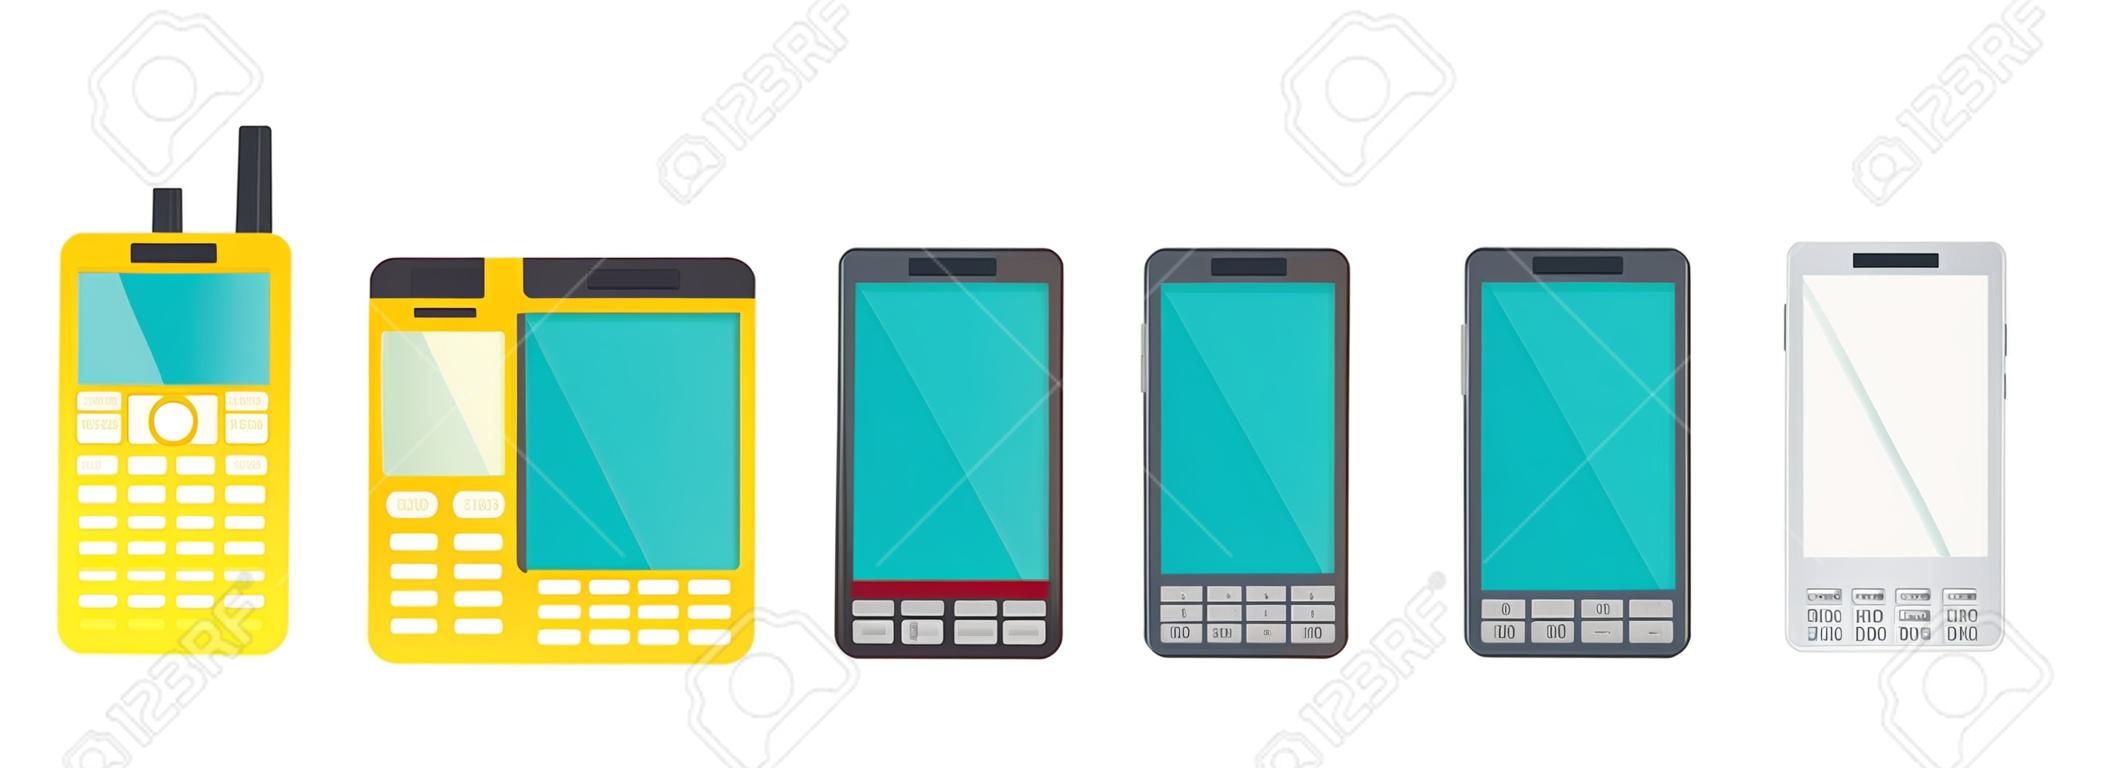 Cell phone evolution illustration. Flat vector.